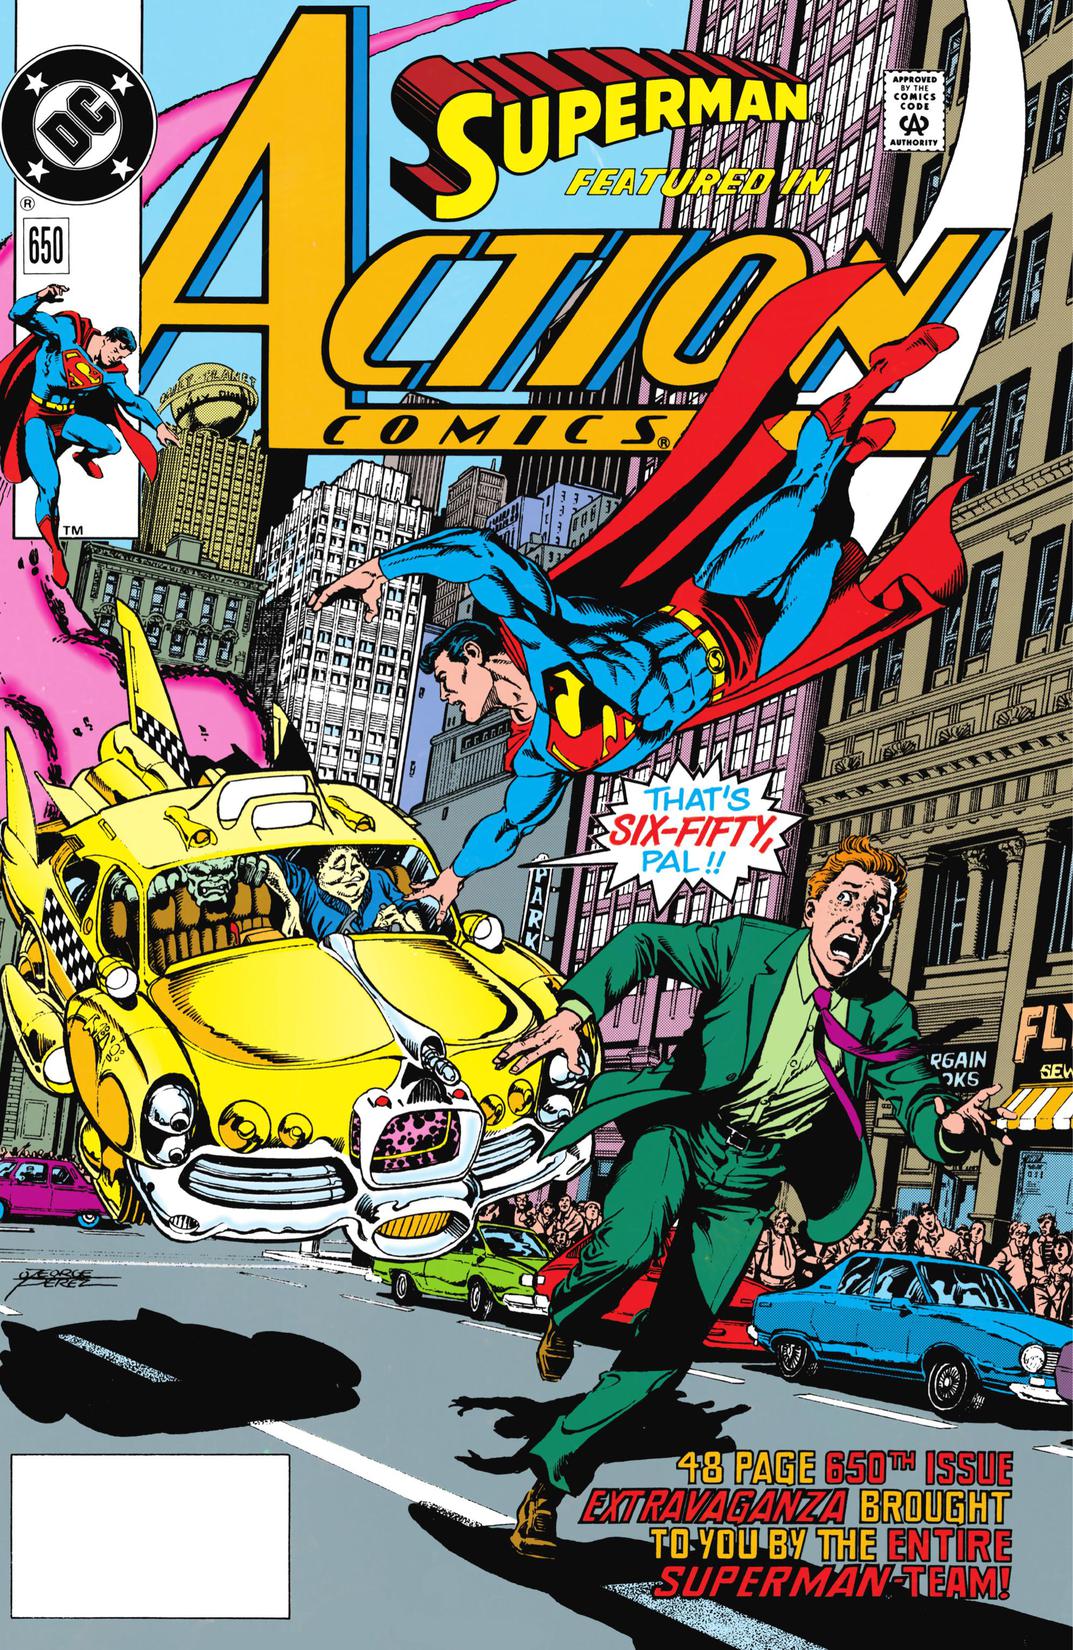 Action Comics (1938-2011) #650 preview images